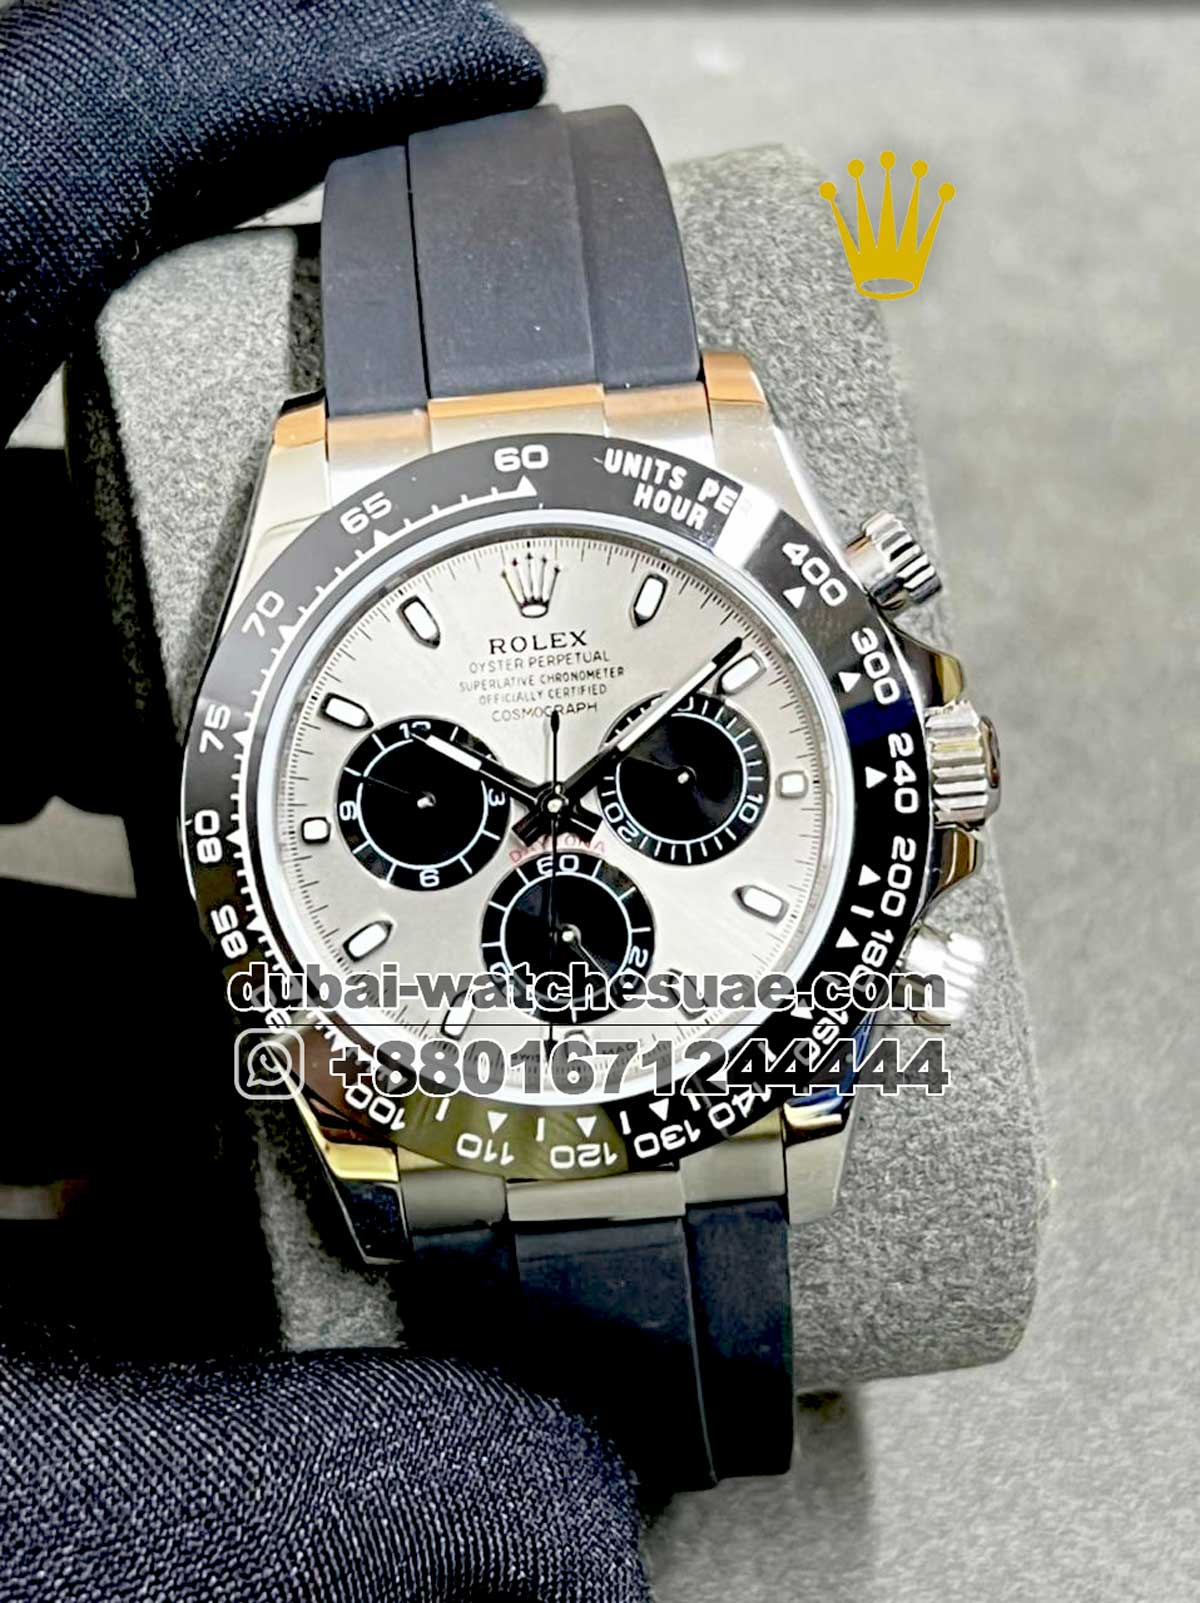 Rolex COSMOGRAPH DAYTONA Oyster, 40 Mm, M116519LN-0027 - Dubai Watches